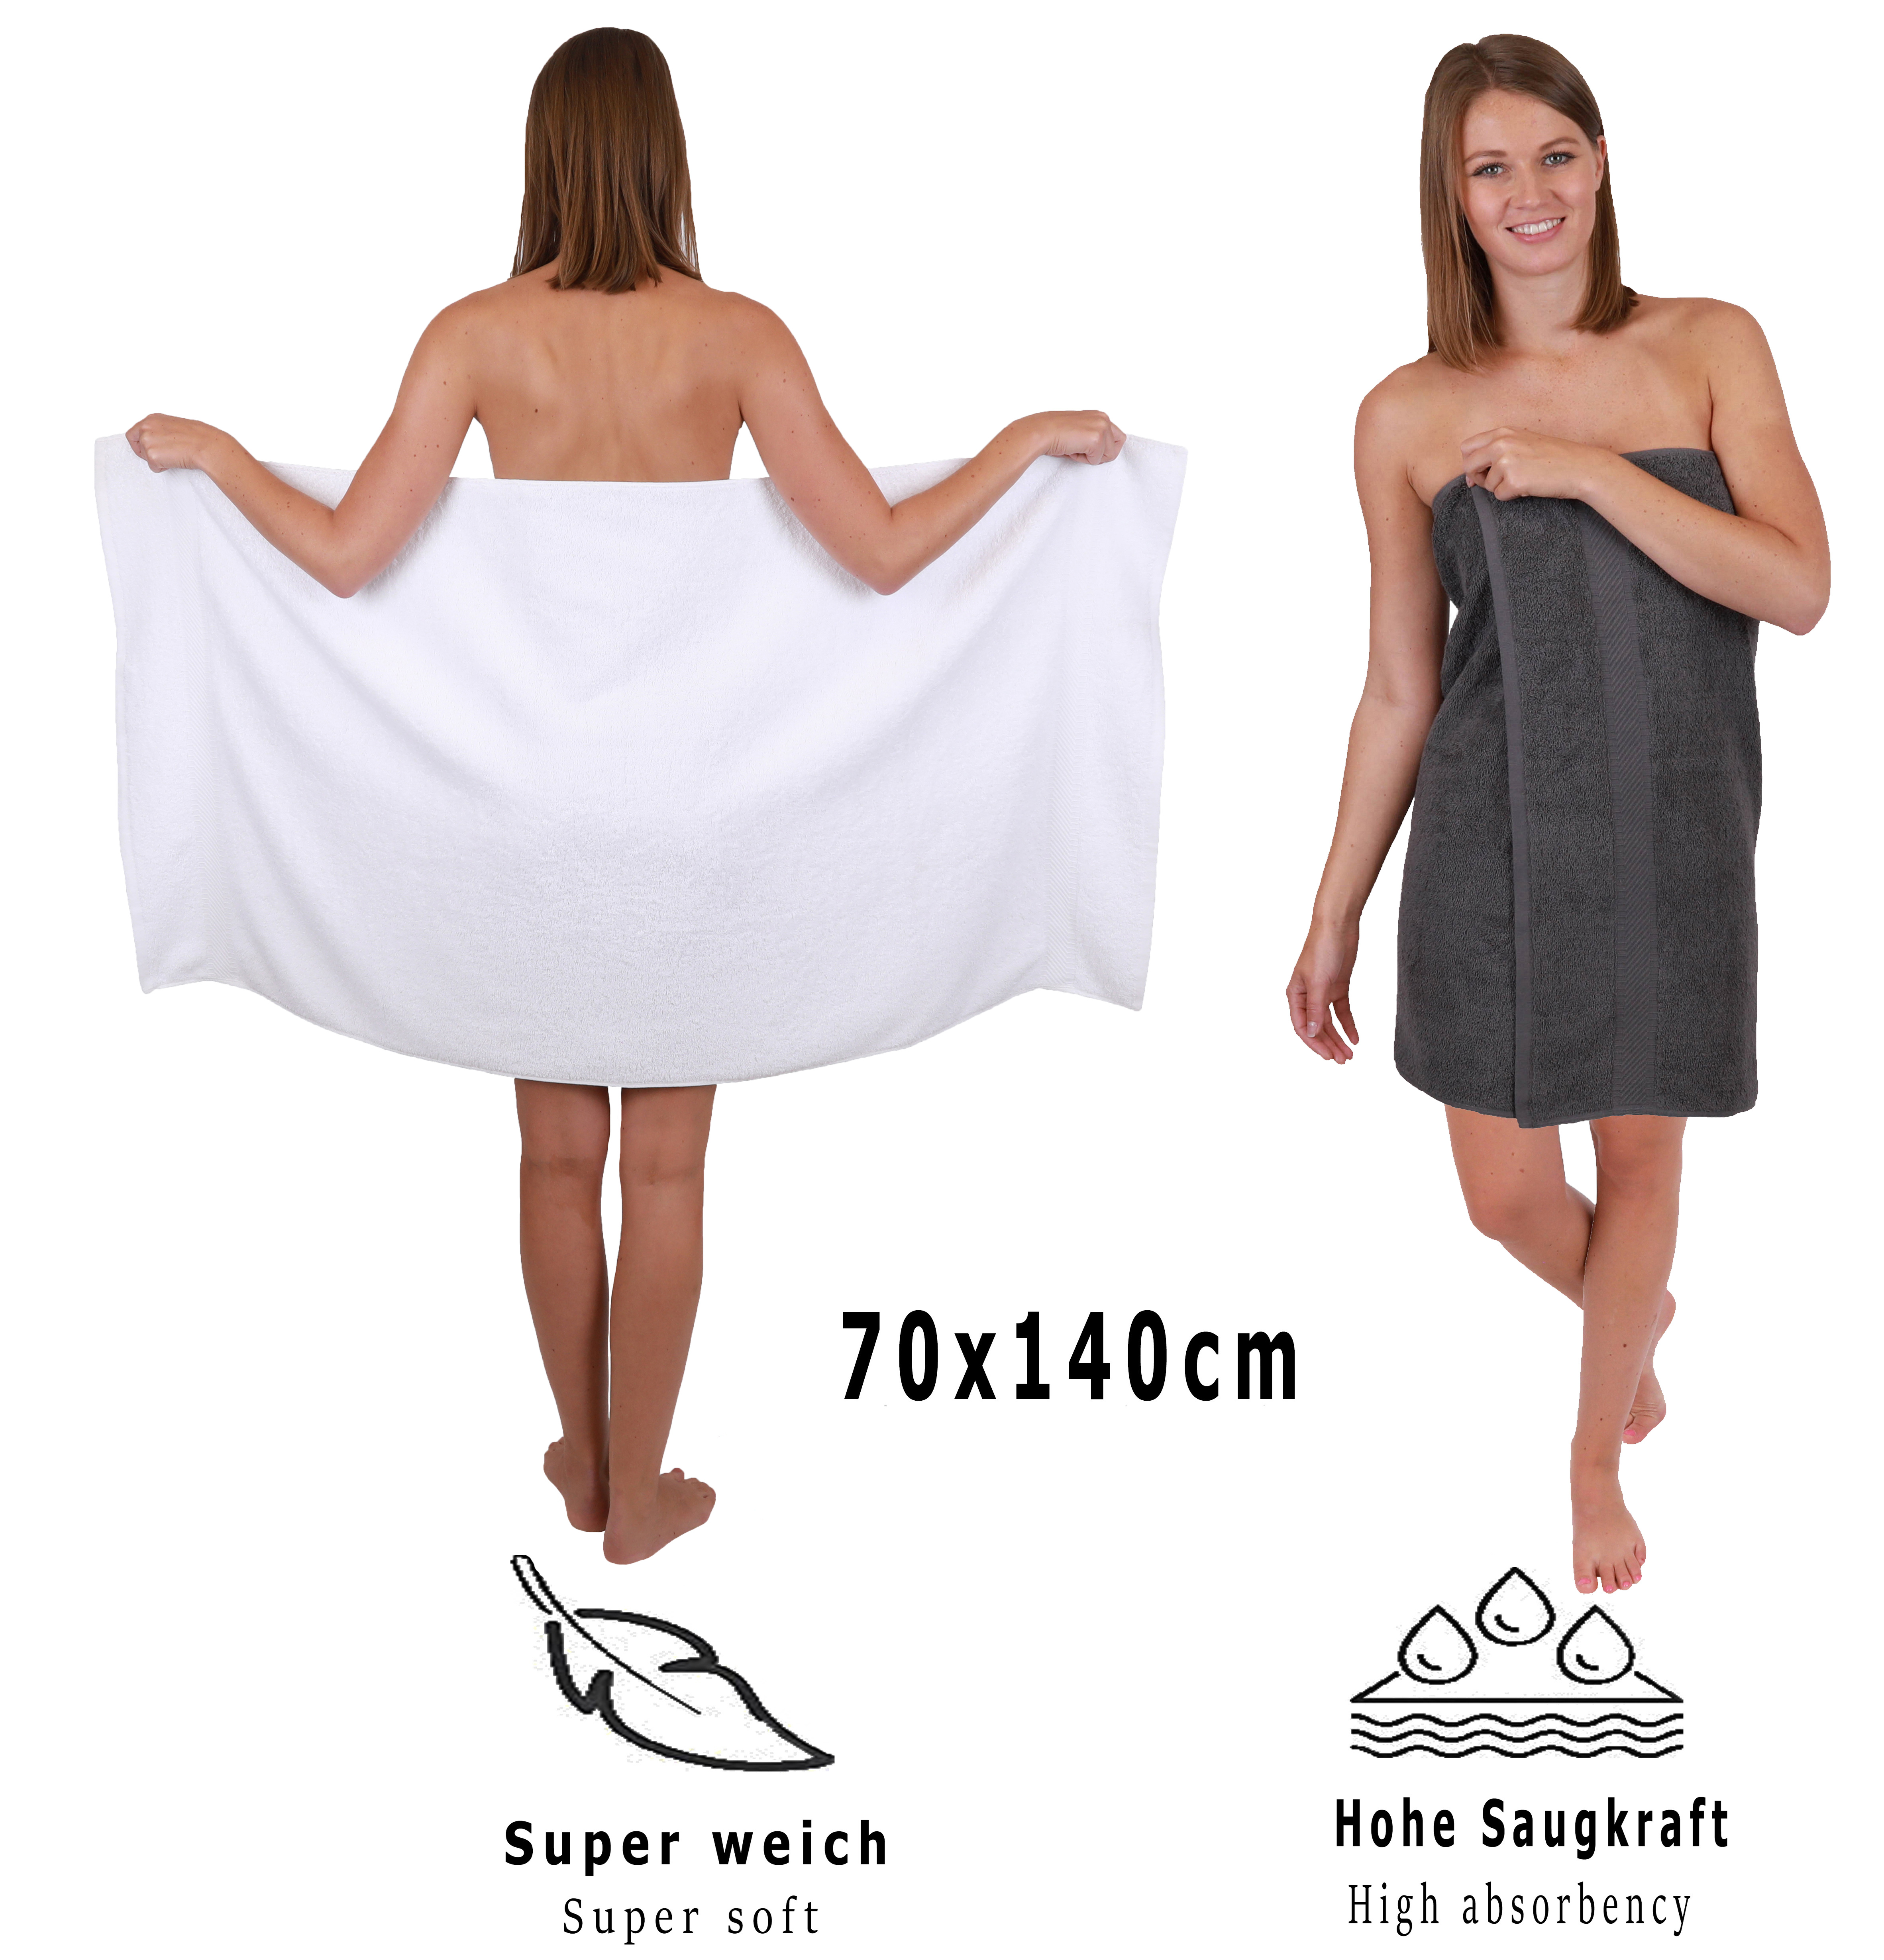 Buy Ultra Soft 100% Cotton 4-Piece Bath Towel Set (White)